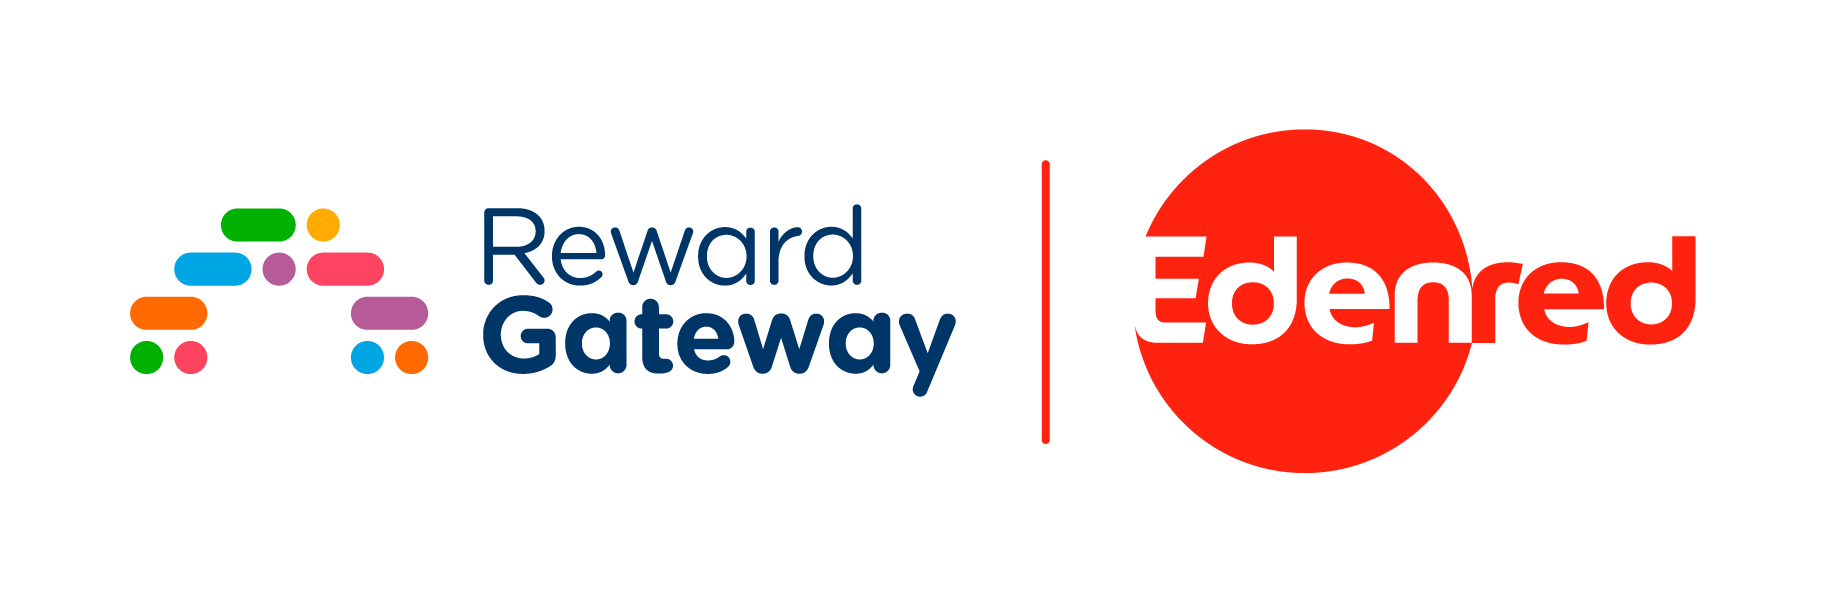 RewardGateway-Edenred-Logo-Web-1